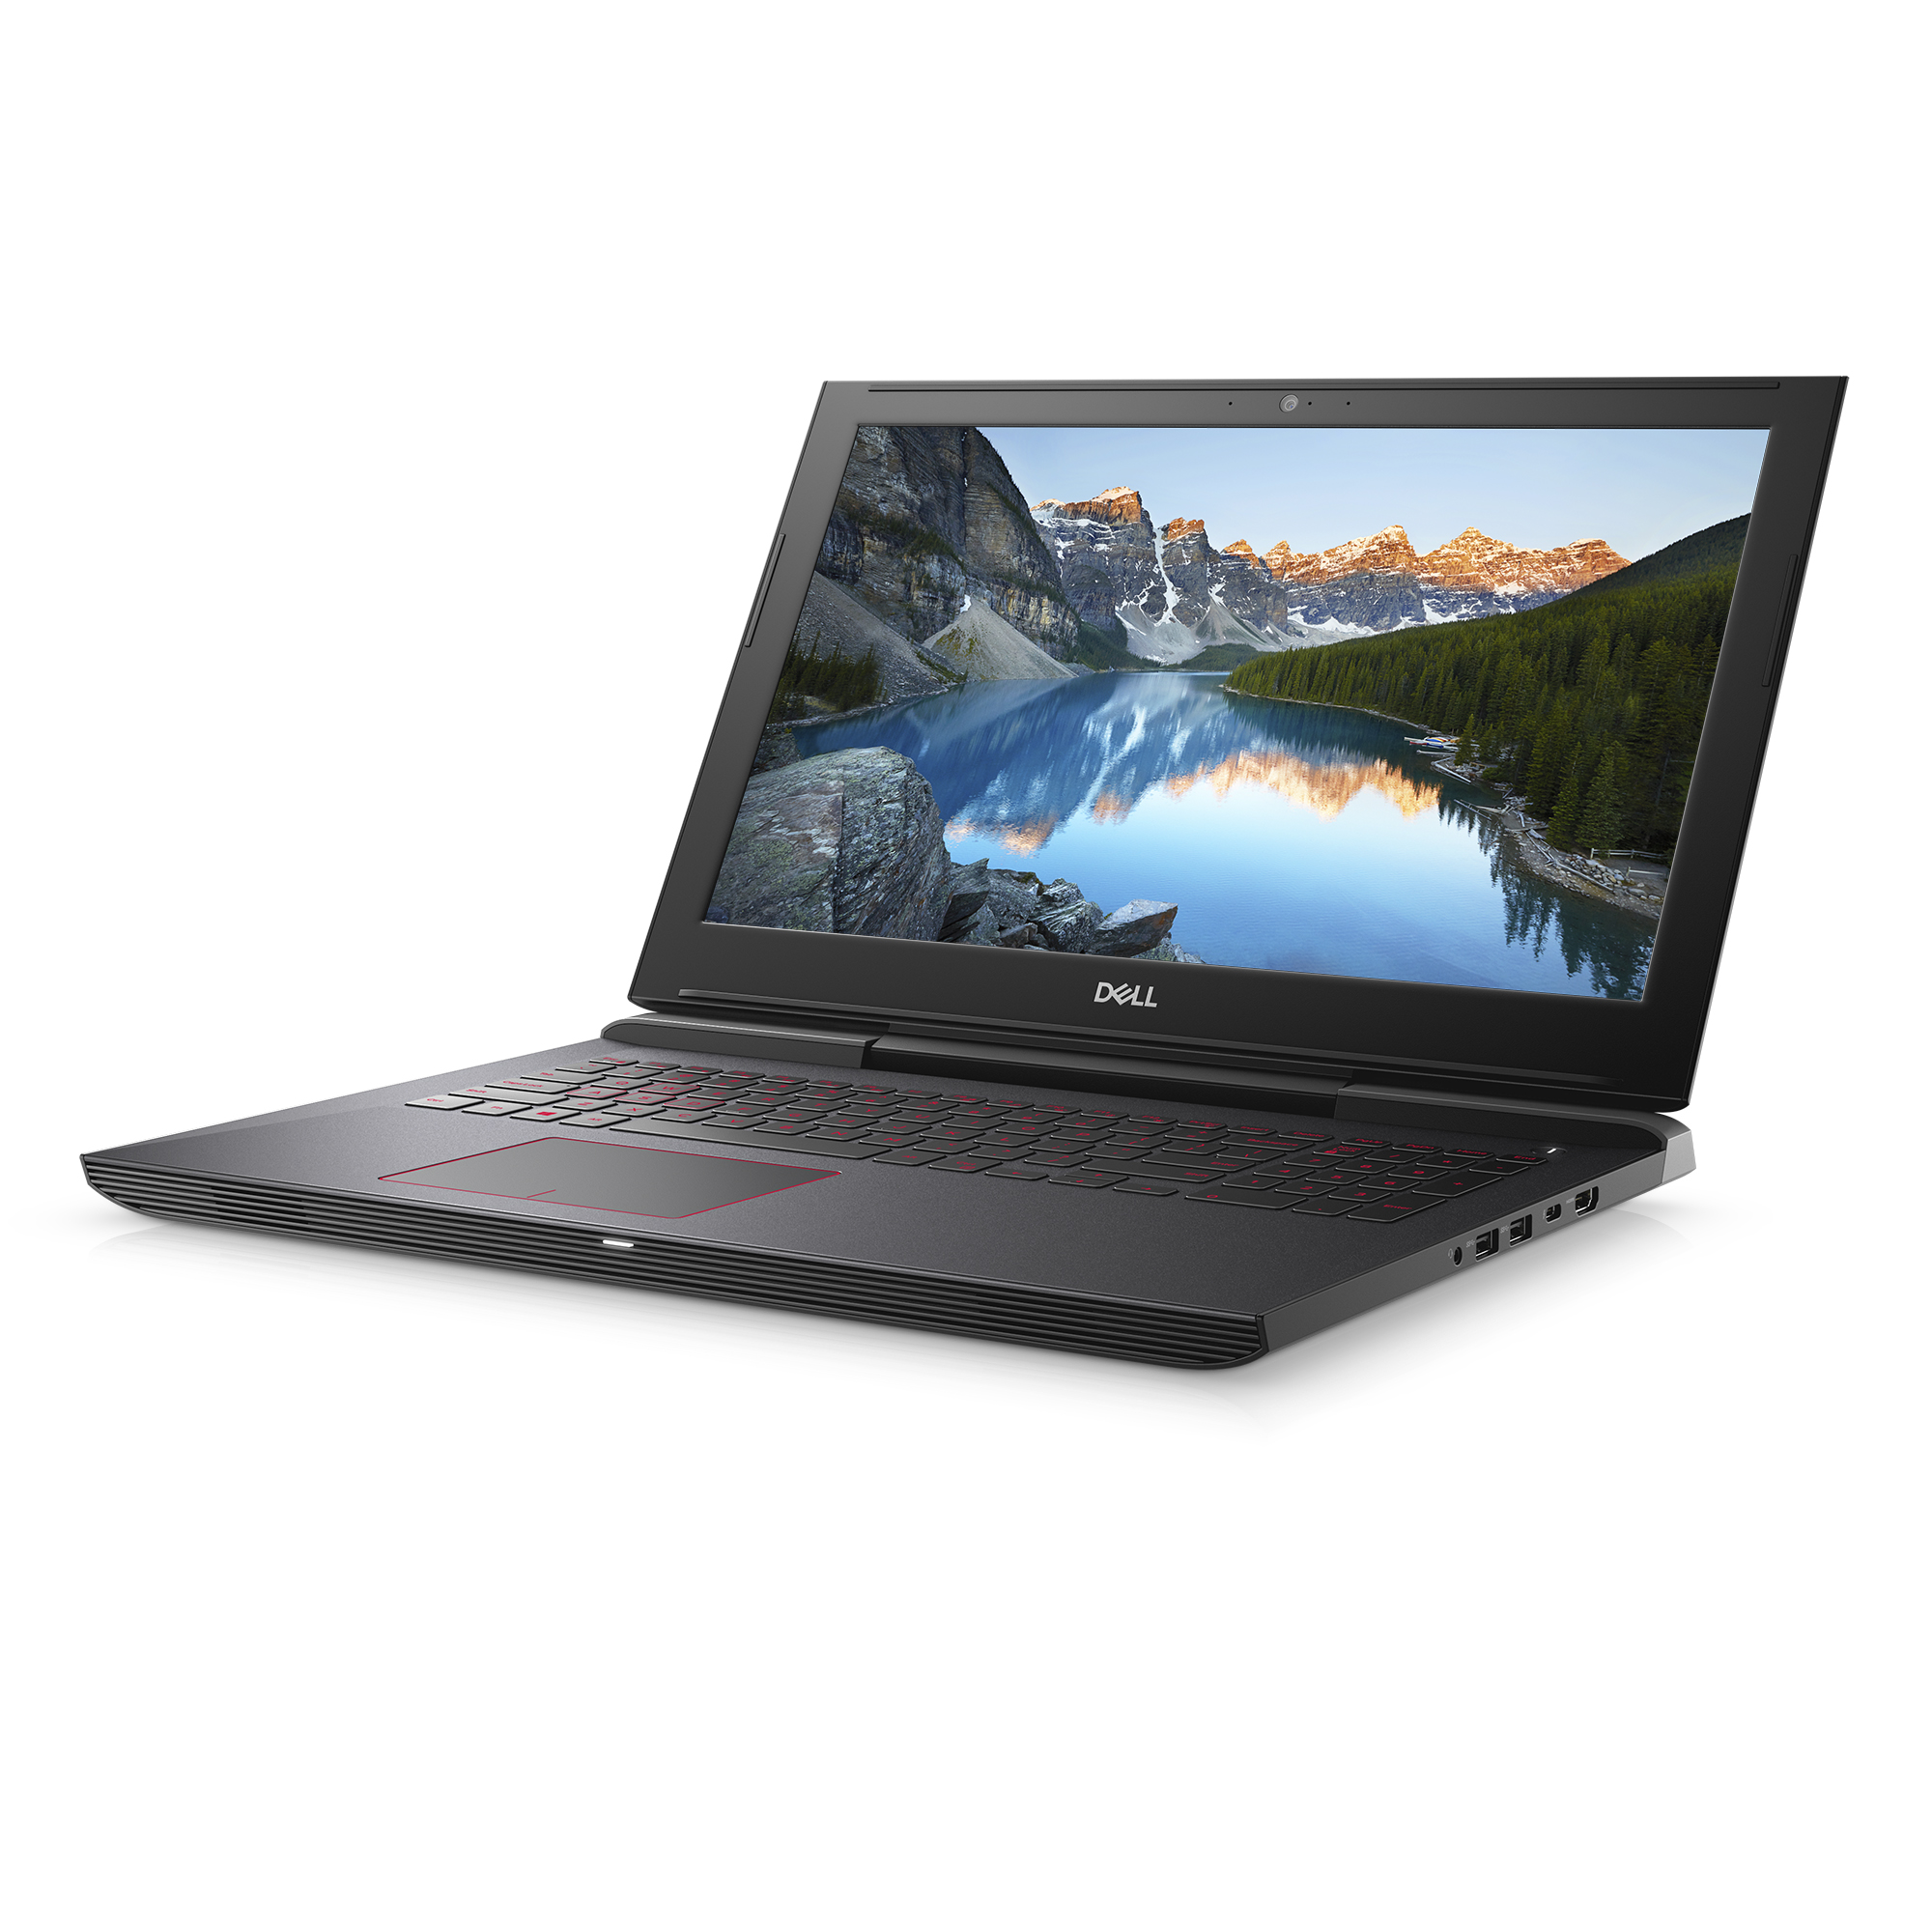 Dell G5 Gaming Laptop 15.6" Full HD, Intel Core i7-8750H, NVIDIA GeForce GTX 1050 Ti 4GB, 1TB HDD + 128GB SSD Storage, 16GB RAM, G5587-7835BLK-PUS - image 5 of 9